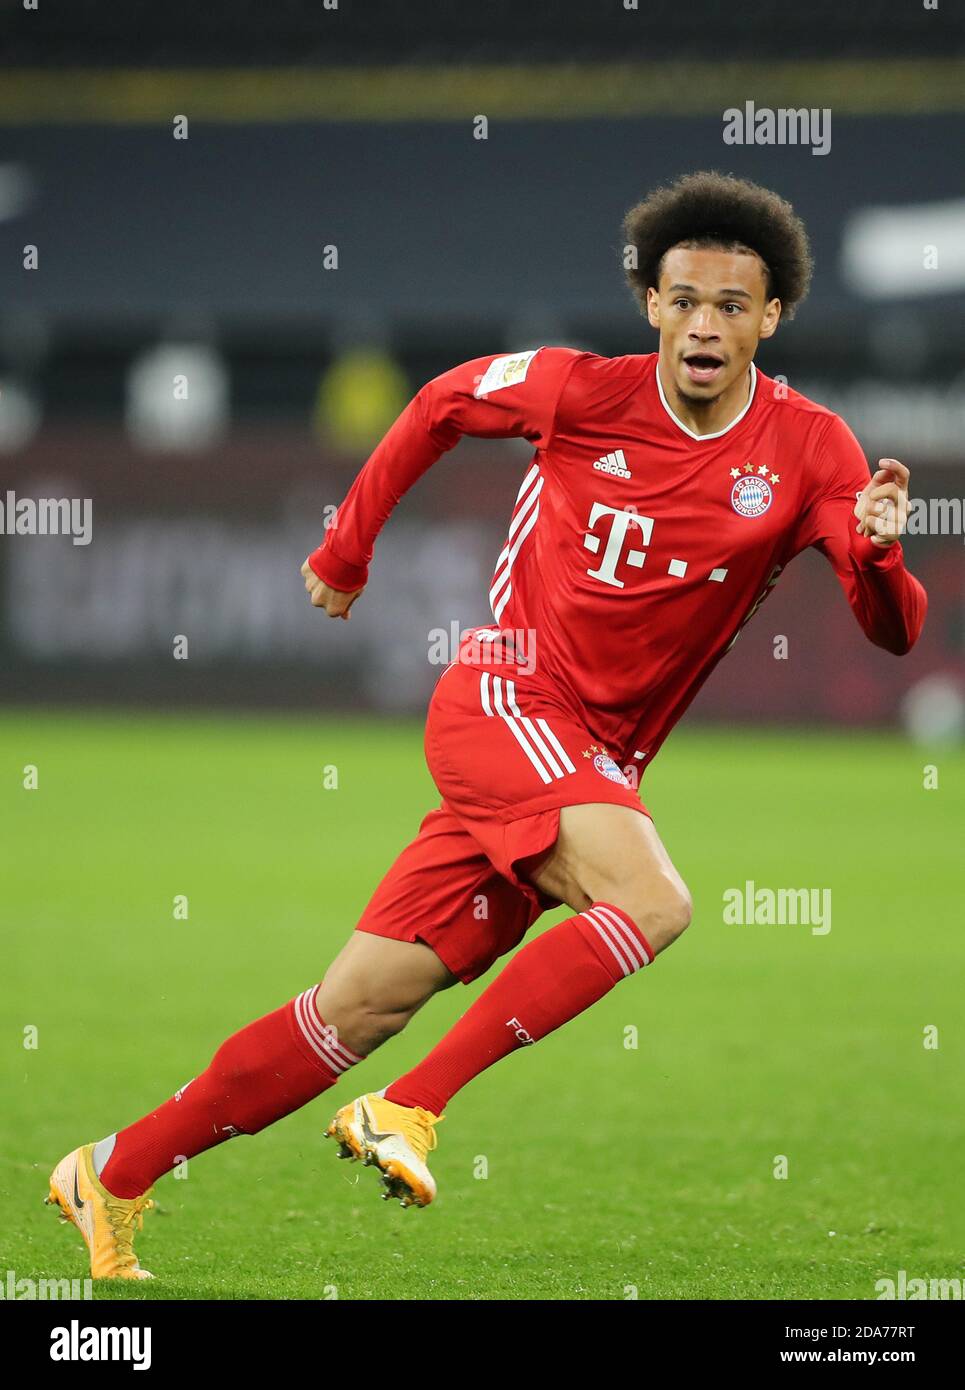 Leroy SANE (M), individual action with ball, action, football 1. Bundesliga,  7th matchday, Borussia Dortmund (DO) - FC Bayern Munich (M) 2: 3, on  November 7th, 2020 in Dortmund / Germany. Photo: